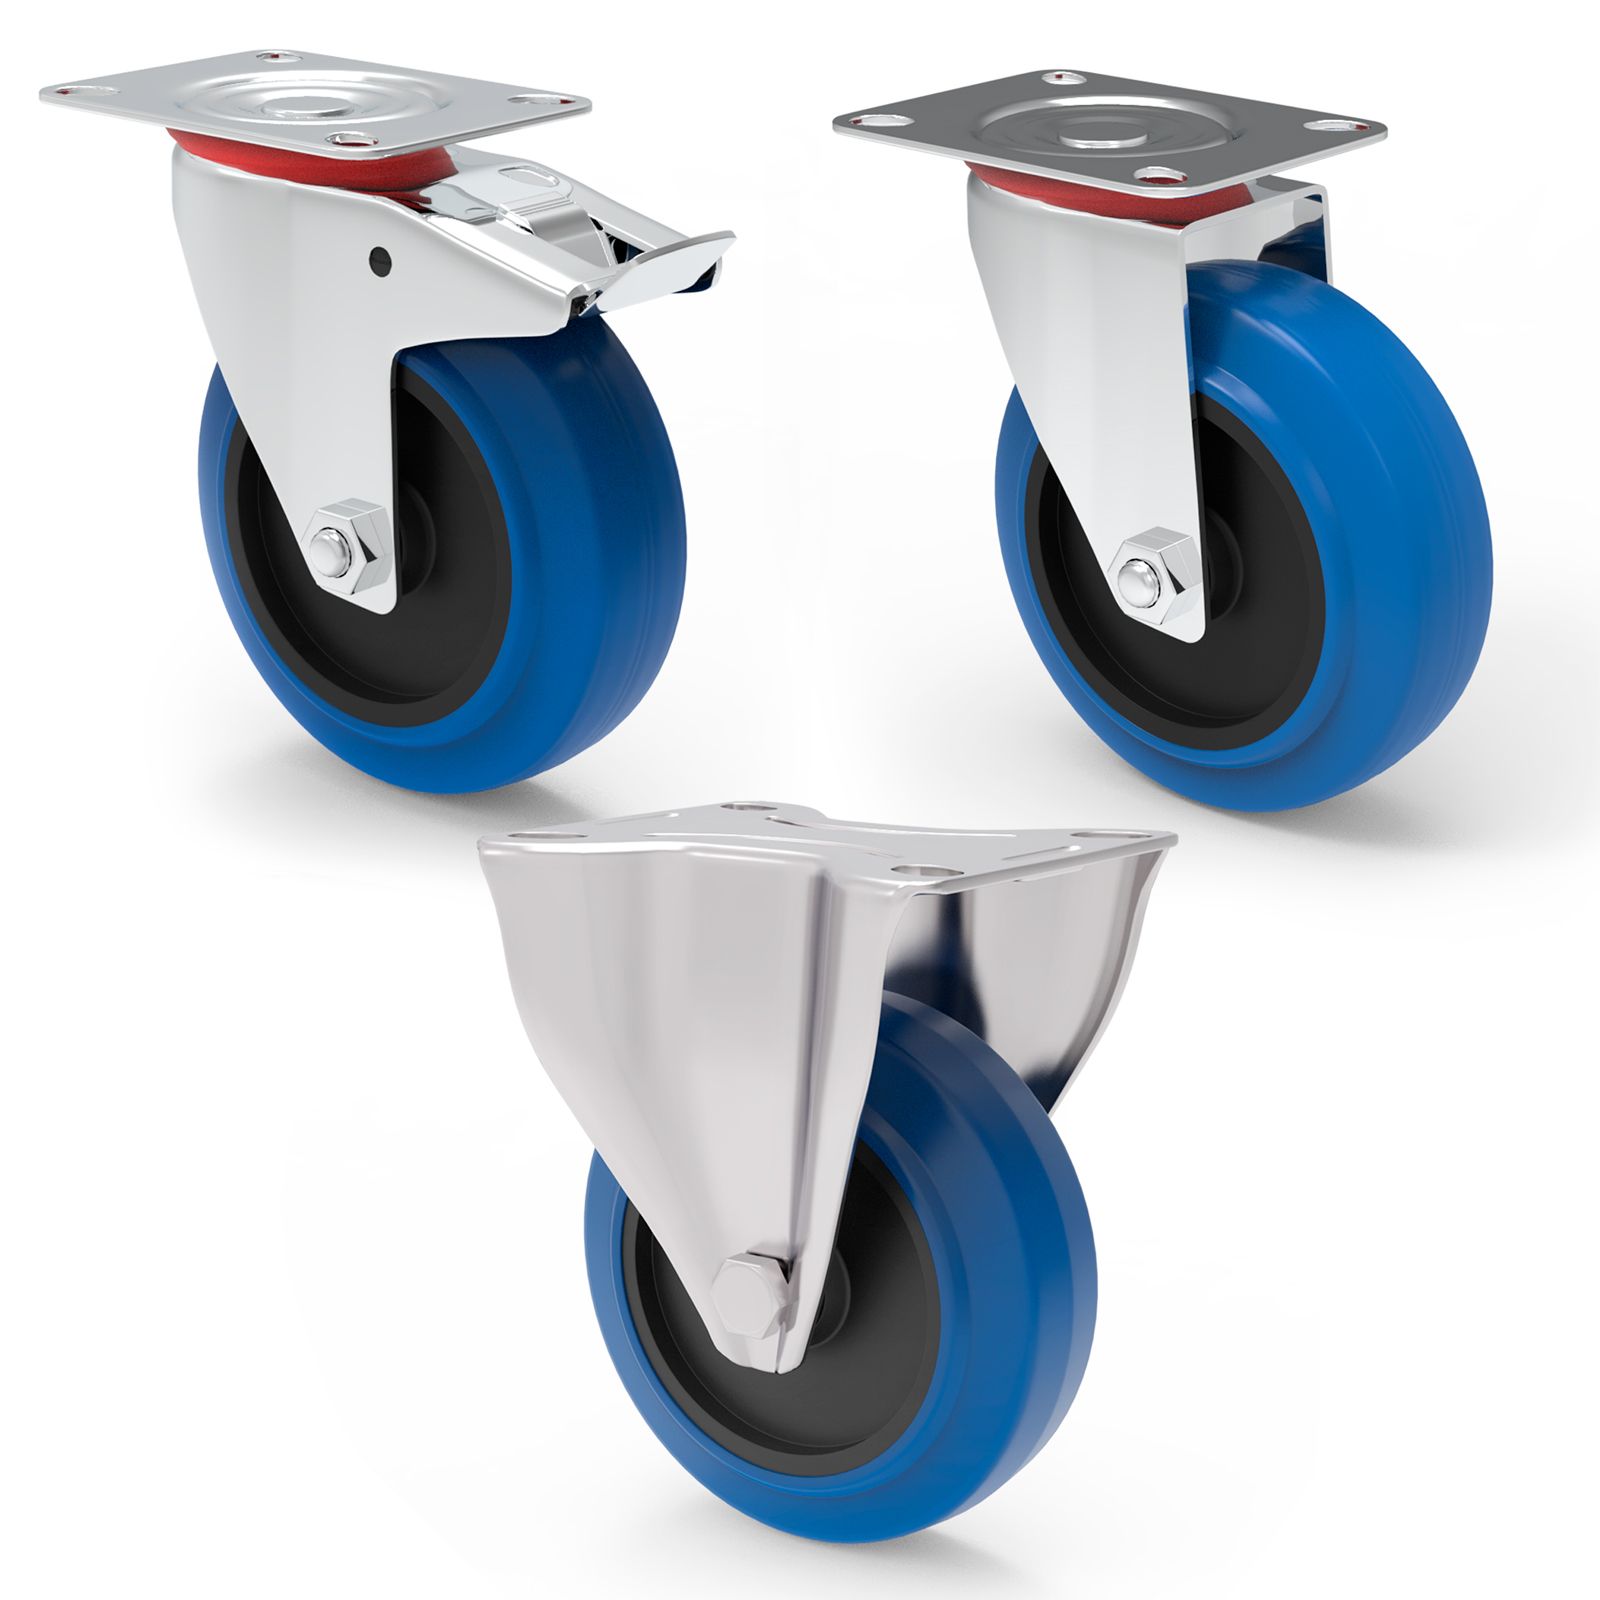 Rollbrett GR-1 4 Blue Wheels m Wheelboard Transportroller Möbelroller Bremse 